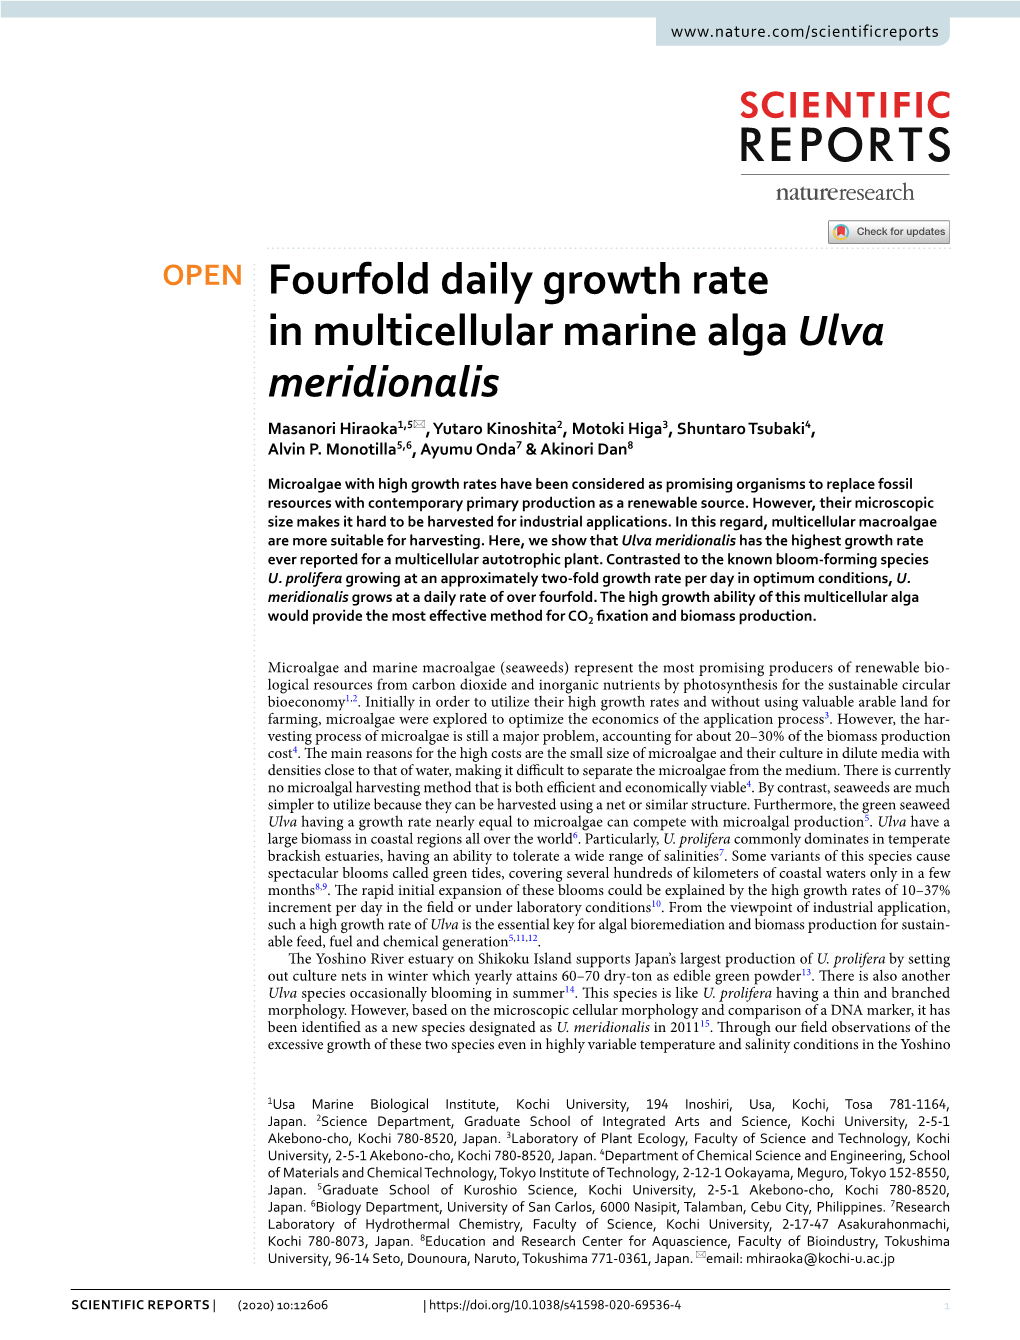 Fourfold Daily Growth Rate in Multicellular Marine Alga Ulva Meridionalis Masanori Hiraoka1,5*, Yutaro Kinoshita2, Motoki Higa3, Shuntaro Tsubaki4, Alvin P